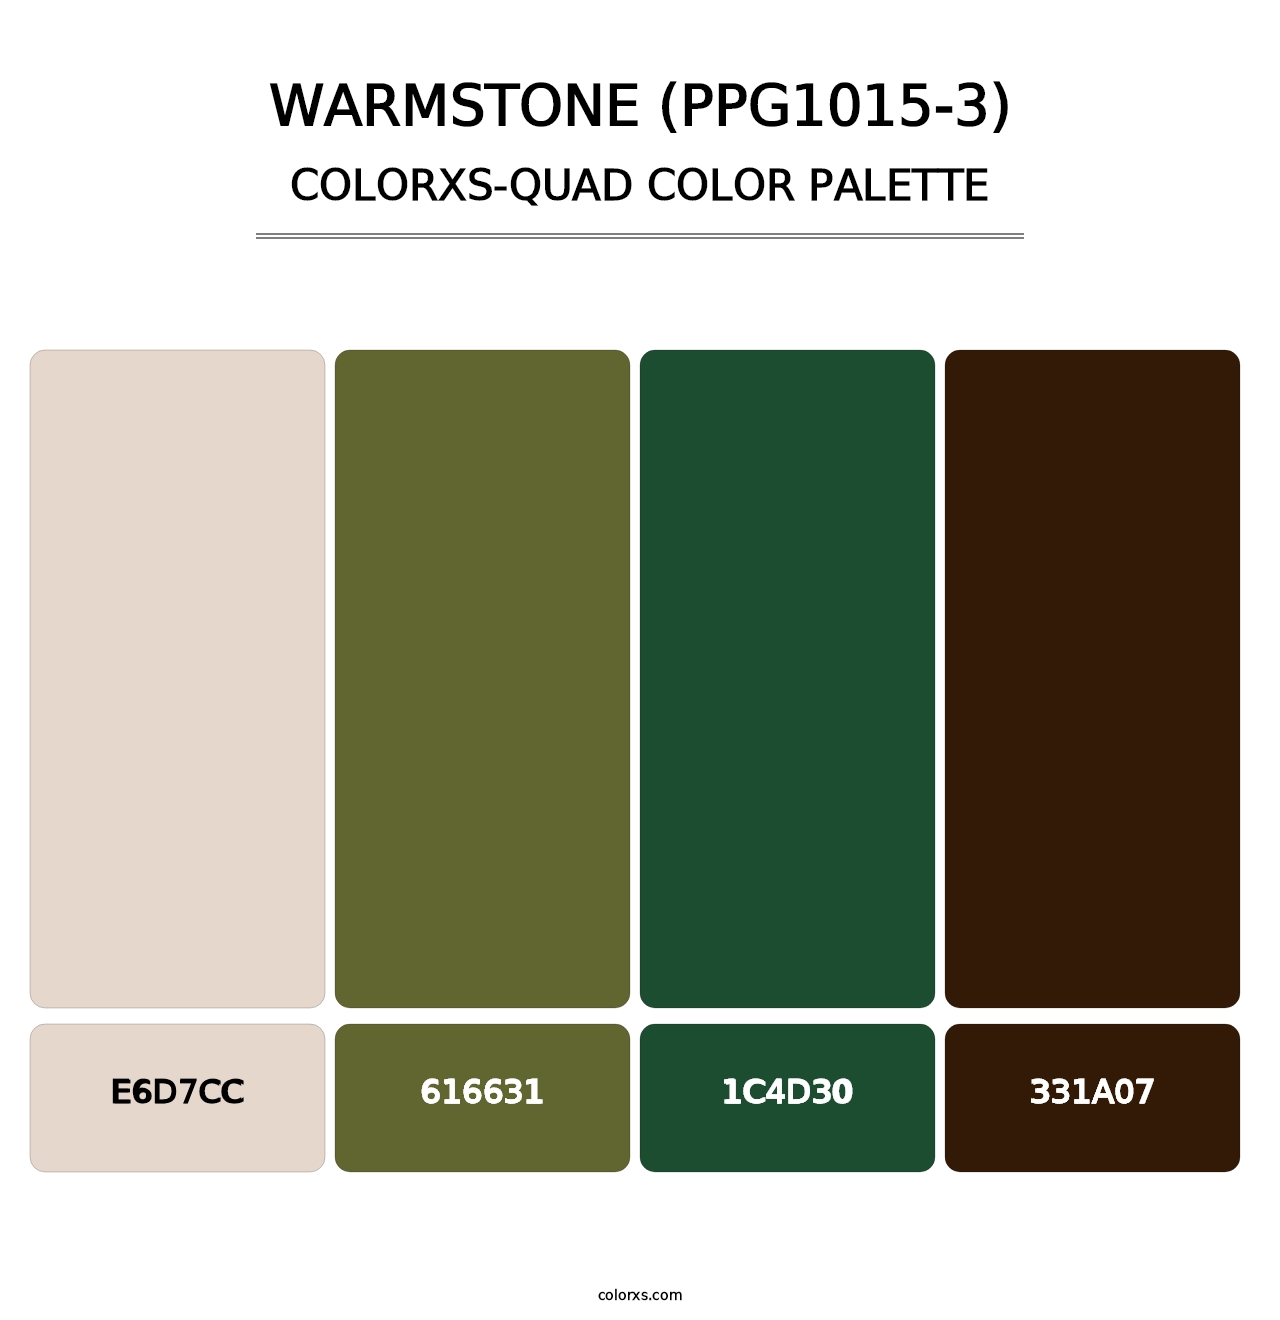 Warmstone (PPG1015-3) - Colorxs Quad Palette